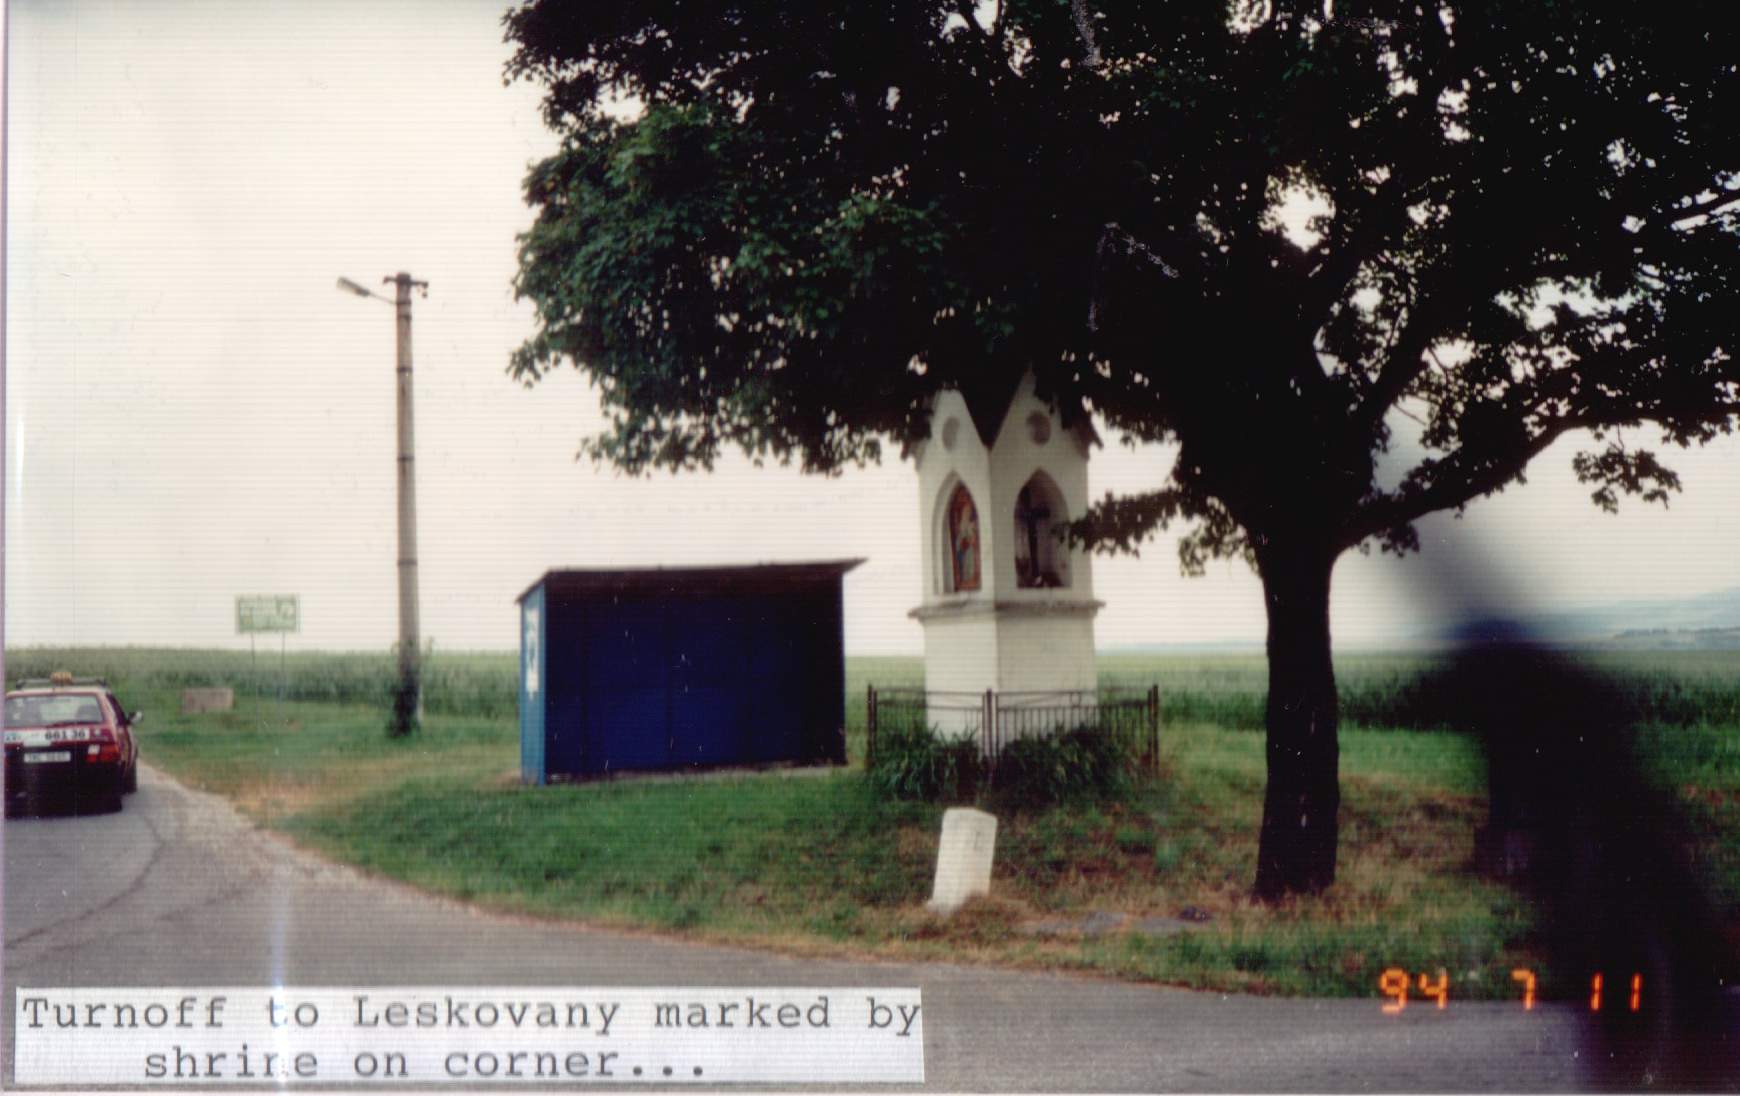 Turn off to Leskovany